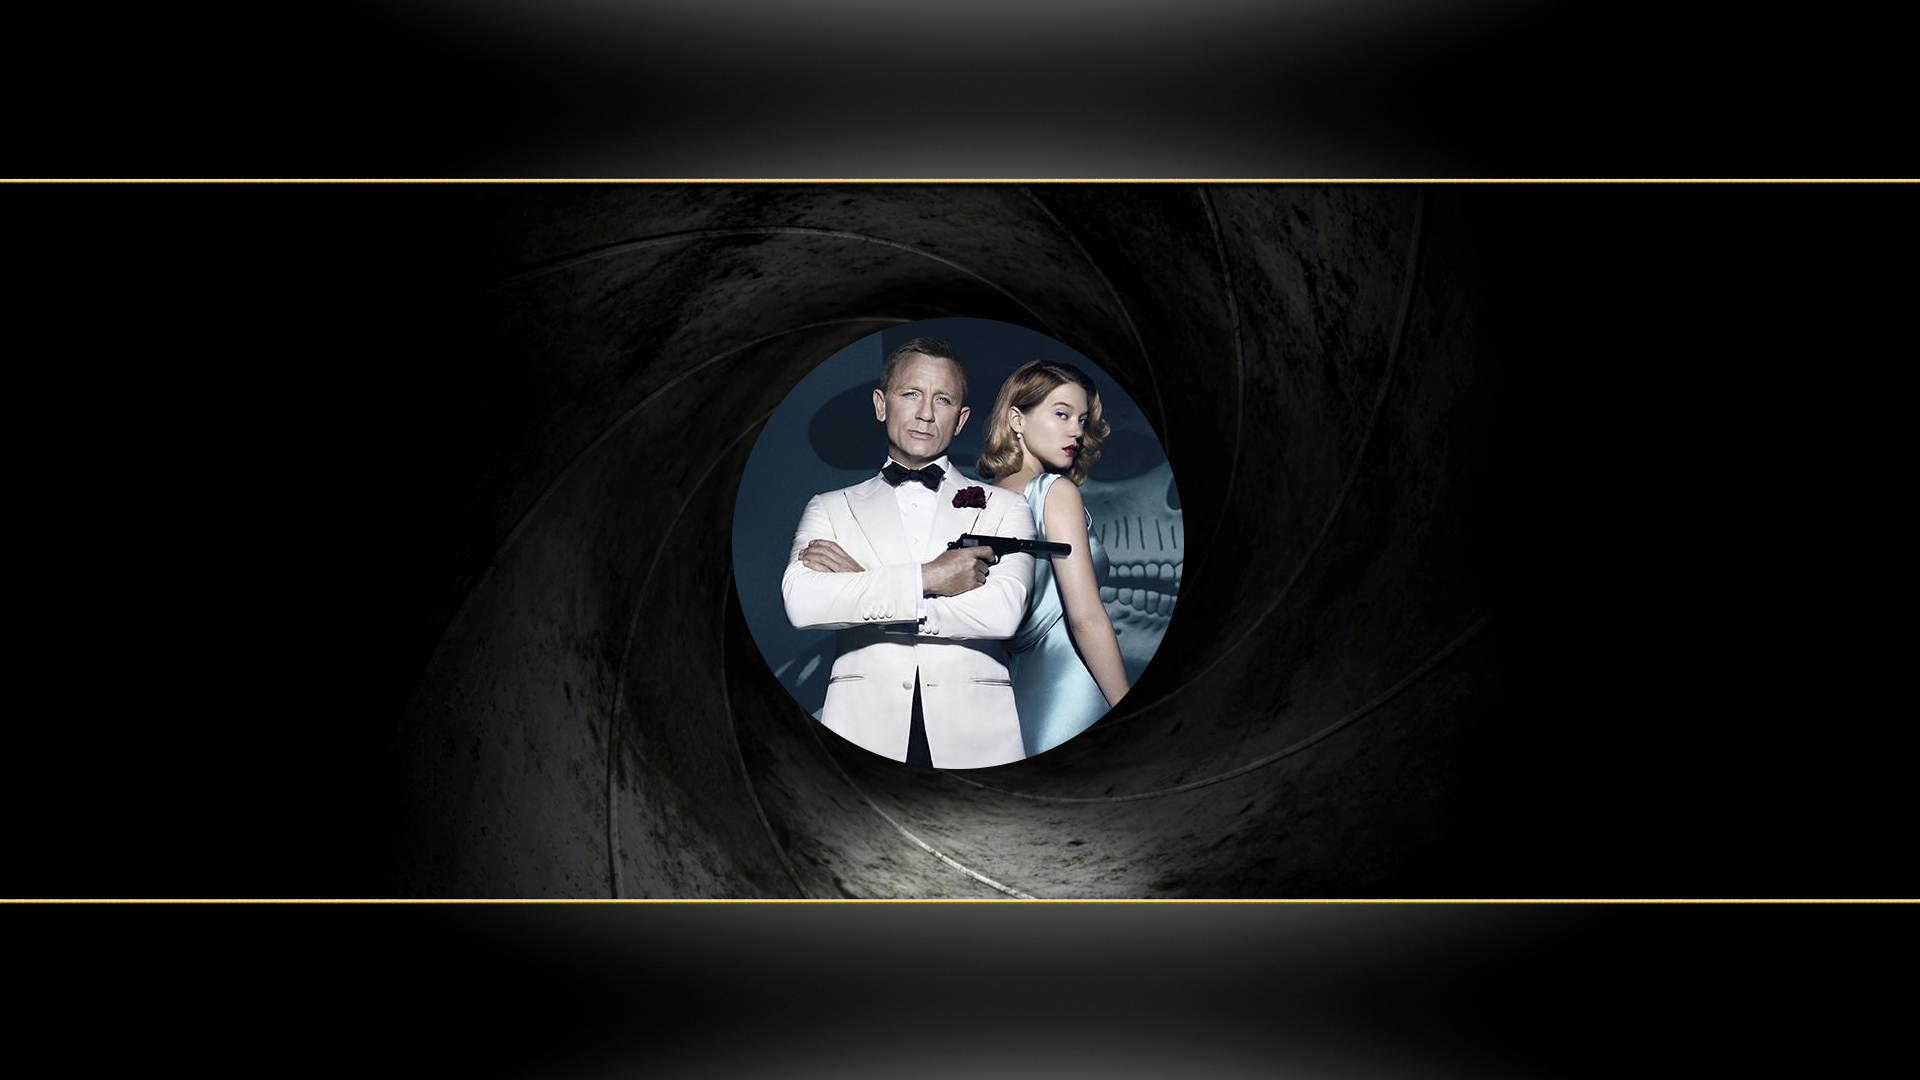 Descarga gratuita de fondo de pantalla para móvil de Películas, Spectre: 007.